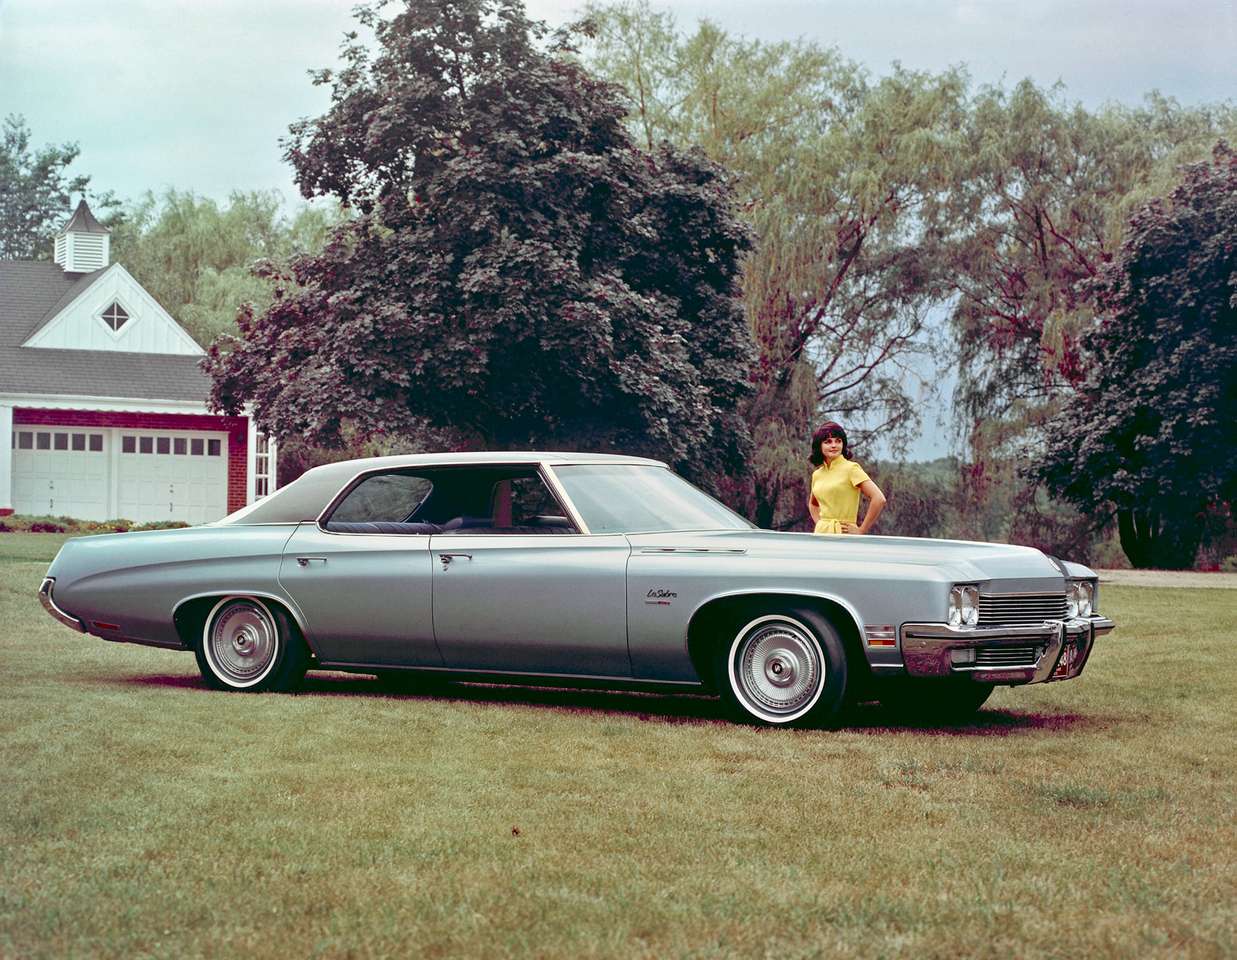 1972 Buick LeSabre Custom Hardtop cu 4 uși puzzle online